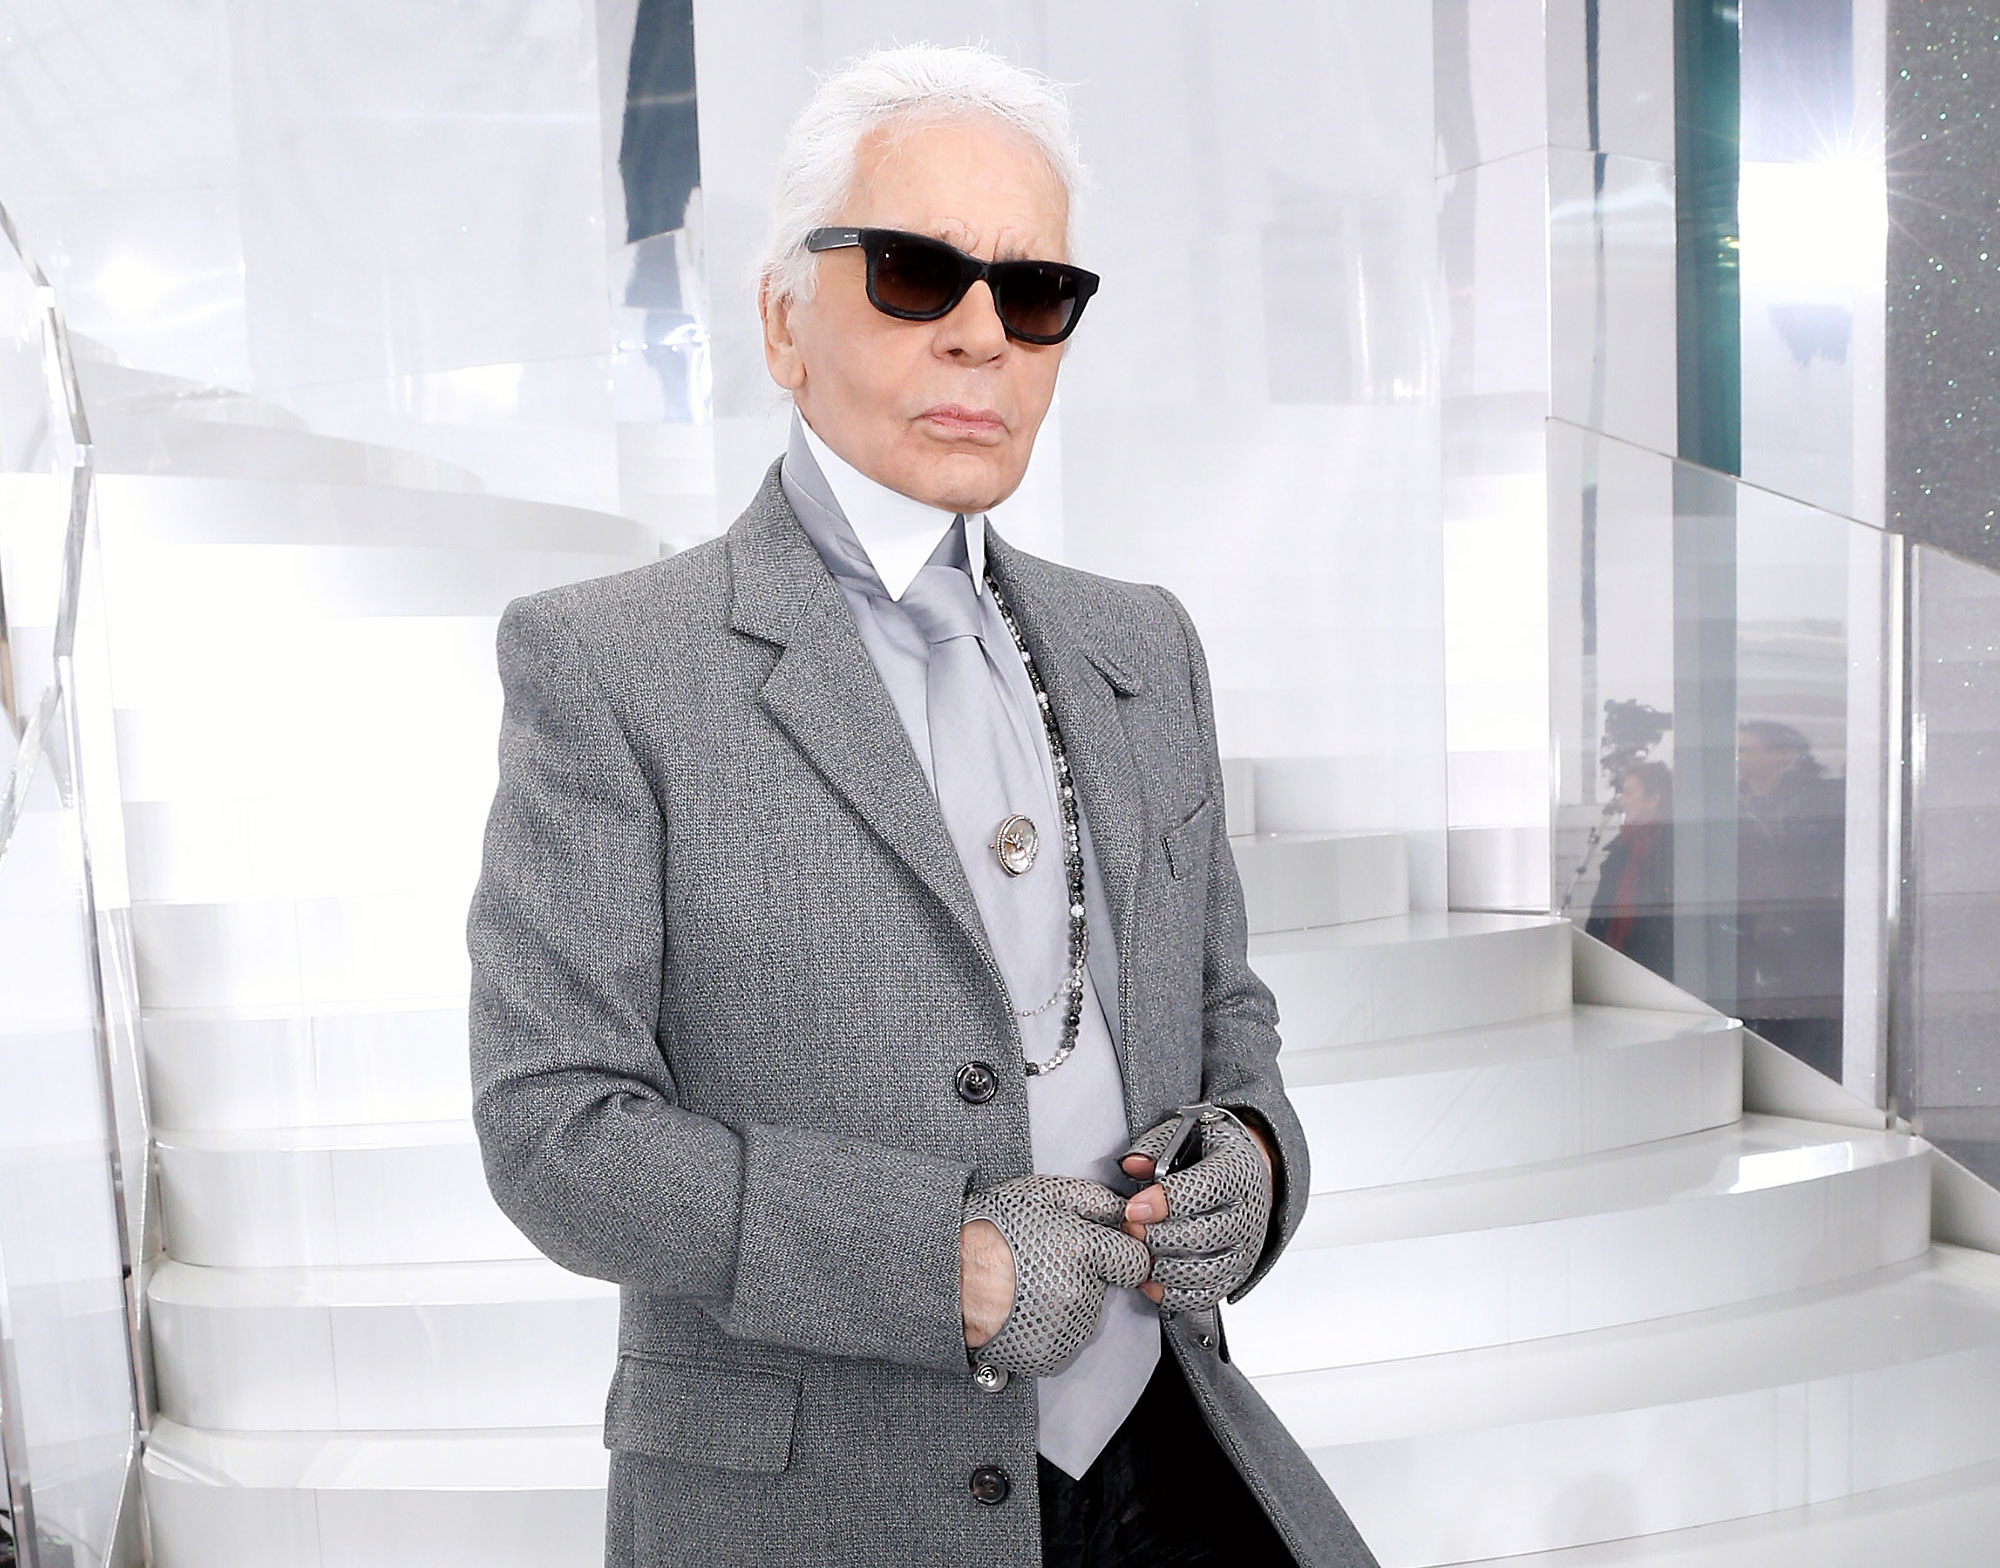 Karl Lagerfeld Dead: Fashion Icon Dies at 85